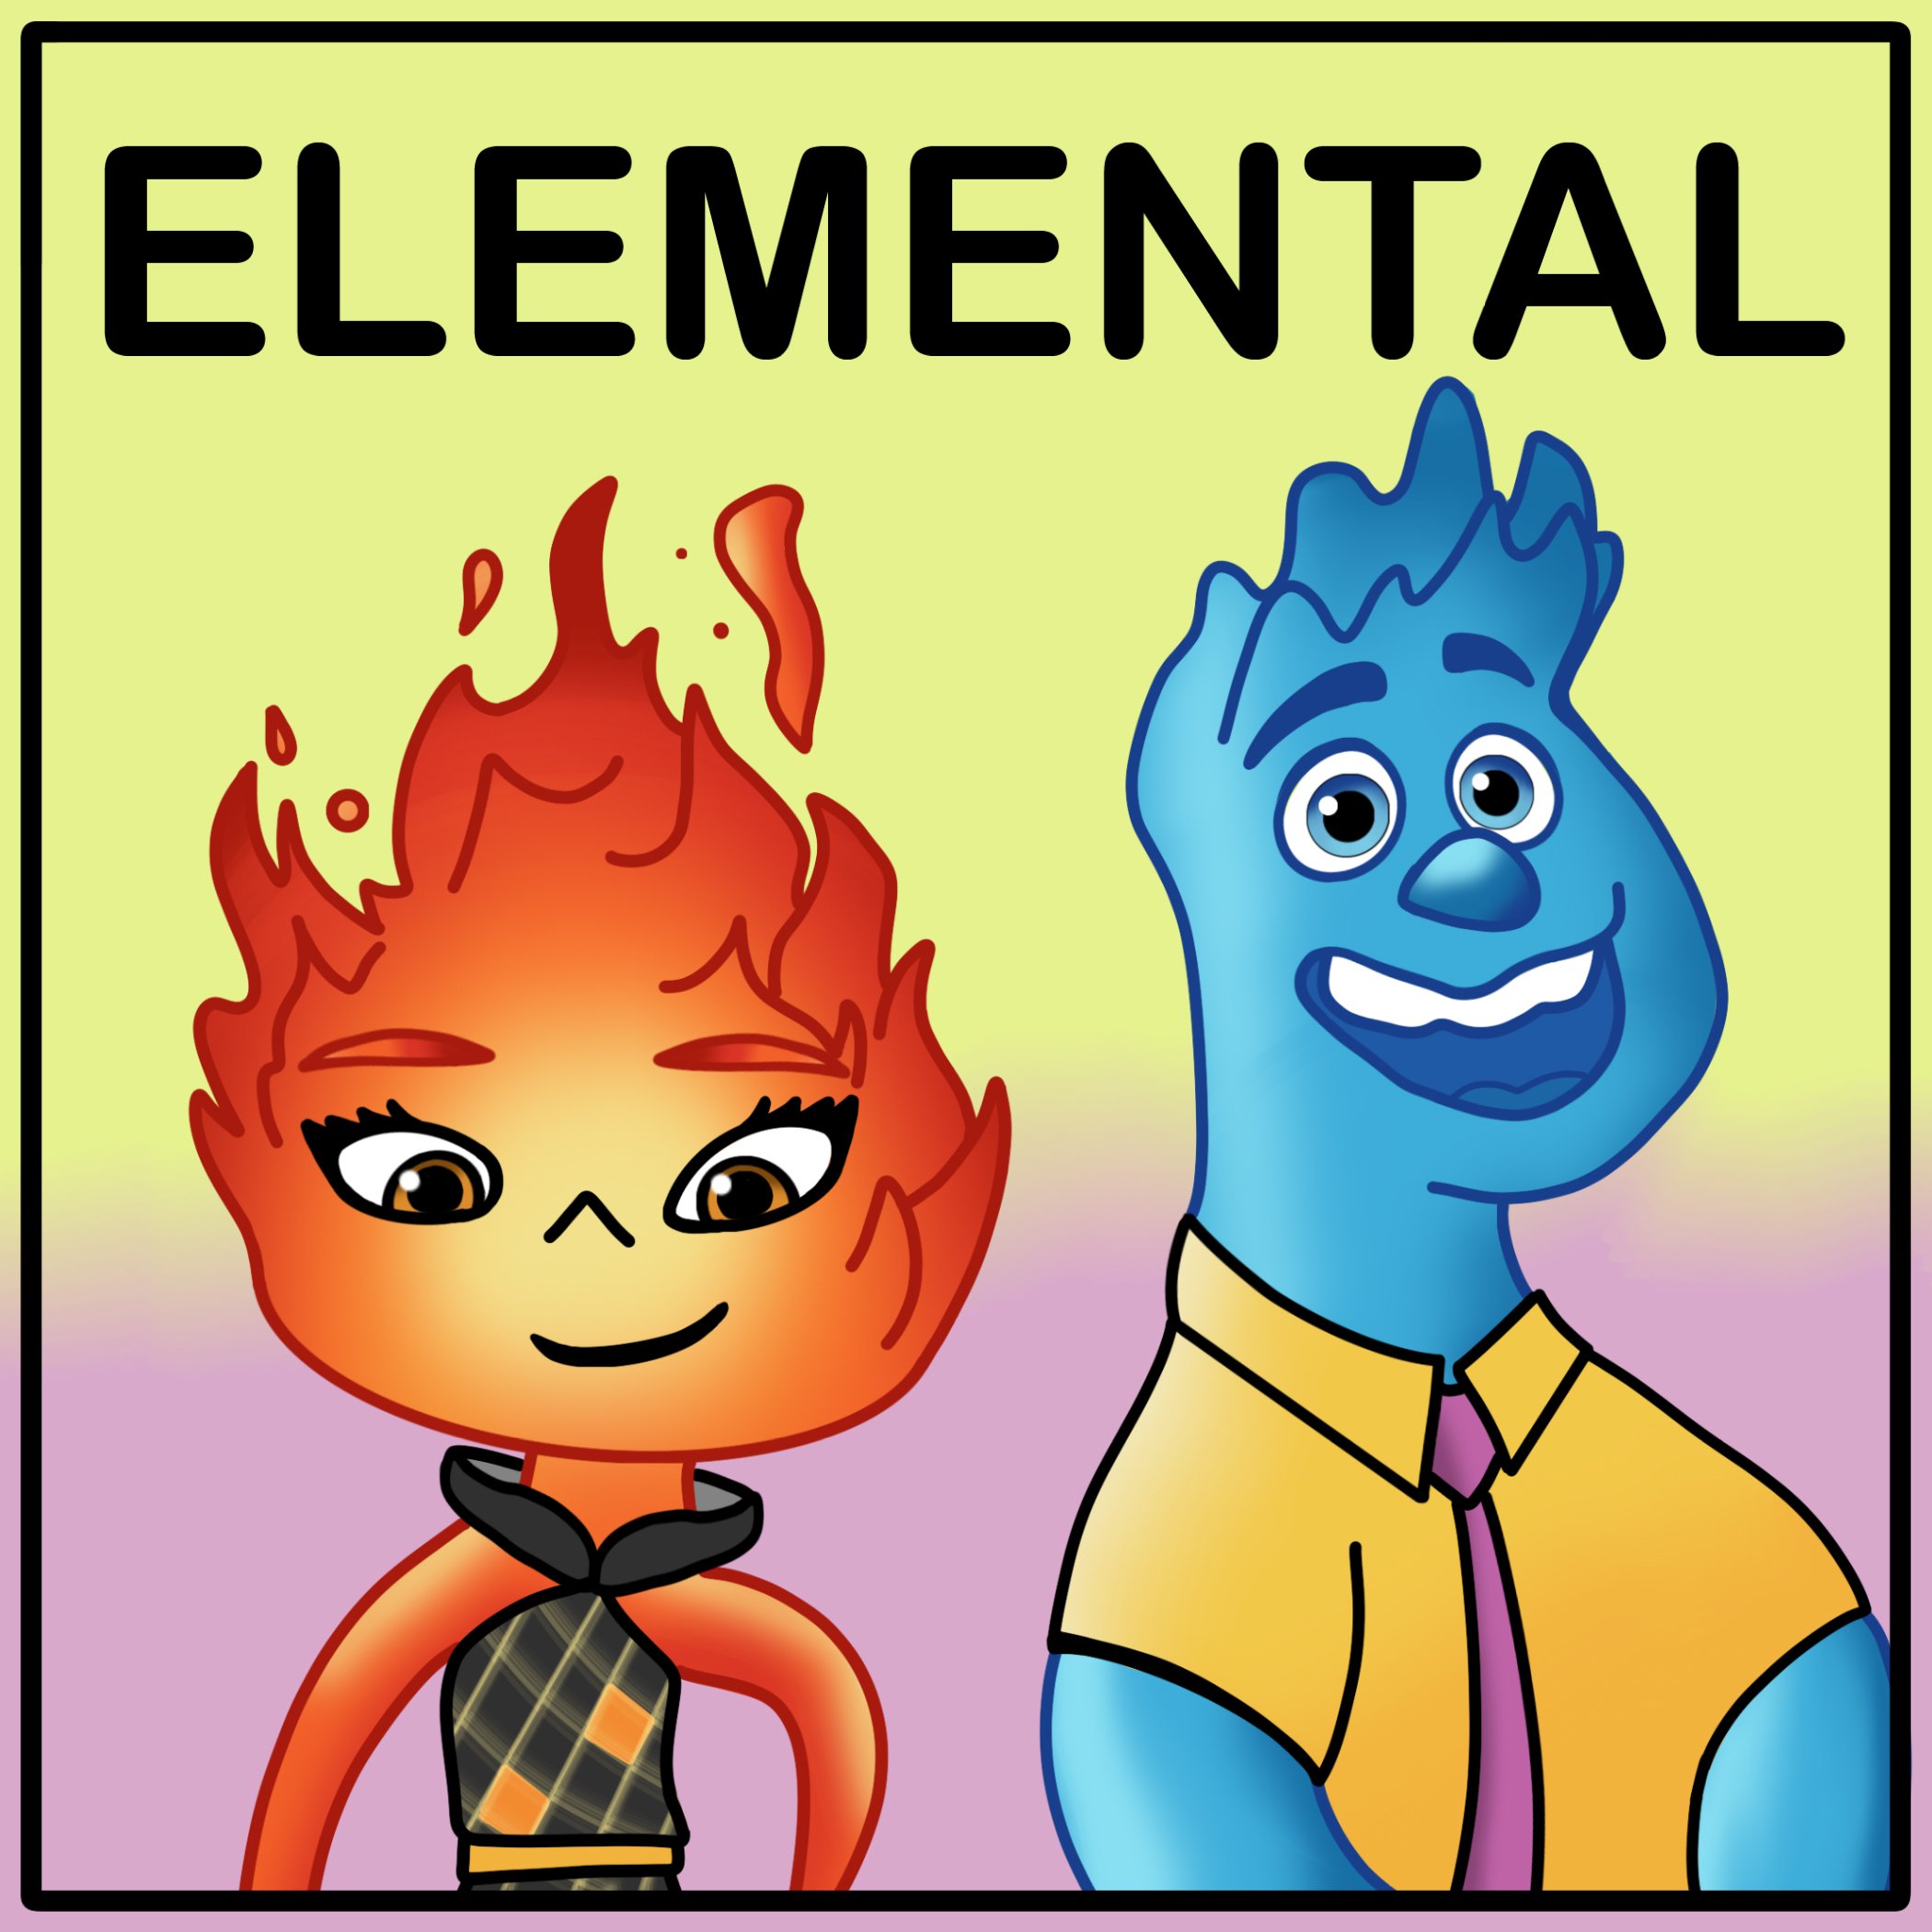 Elemental party